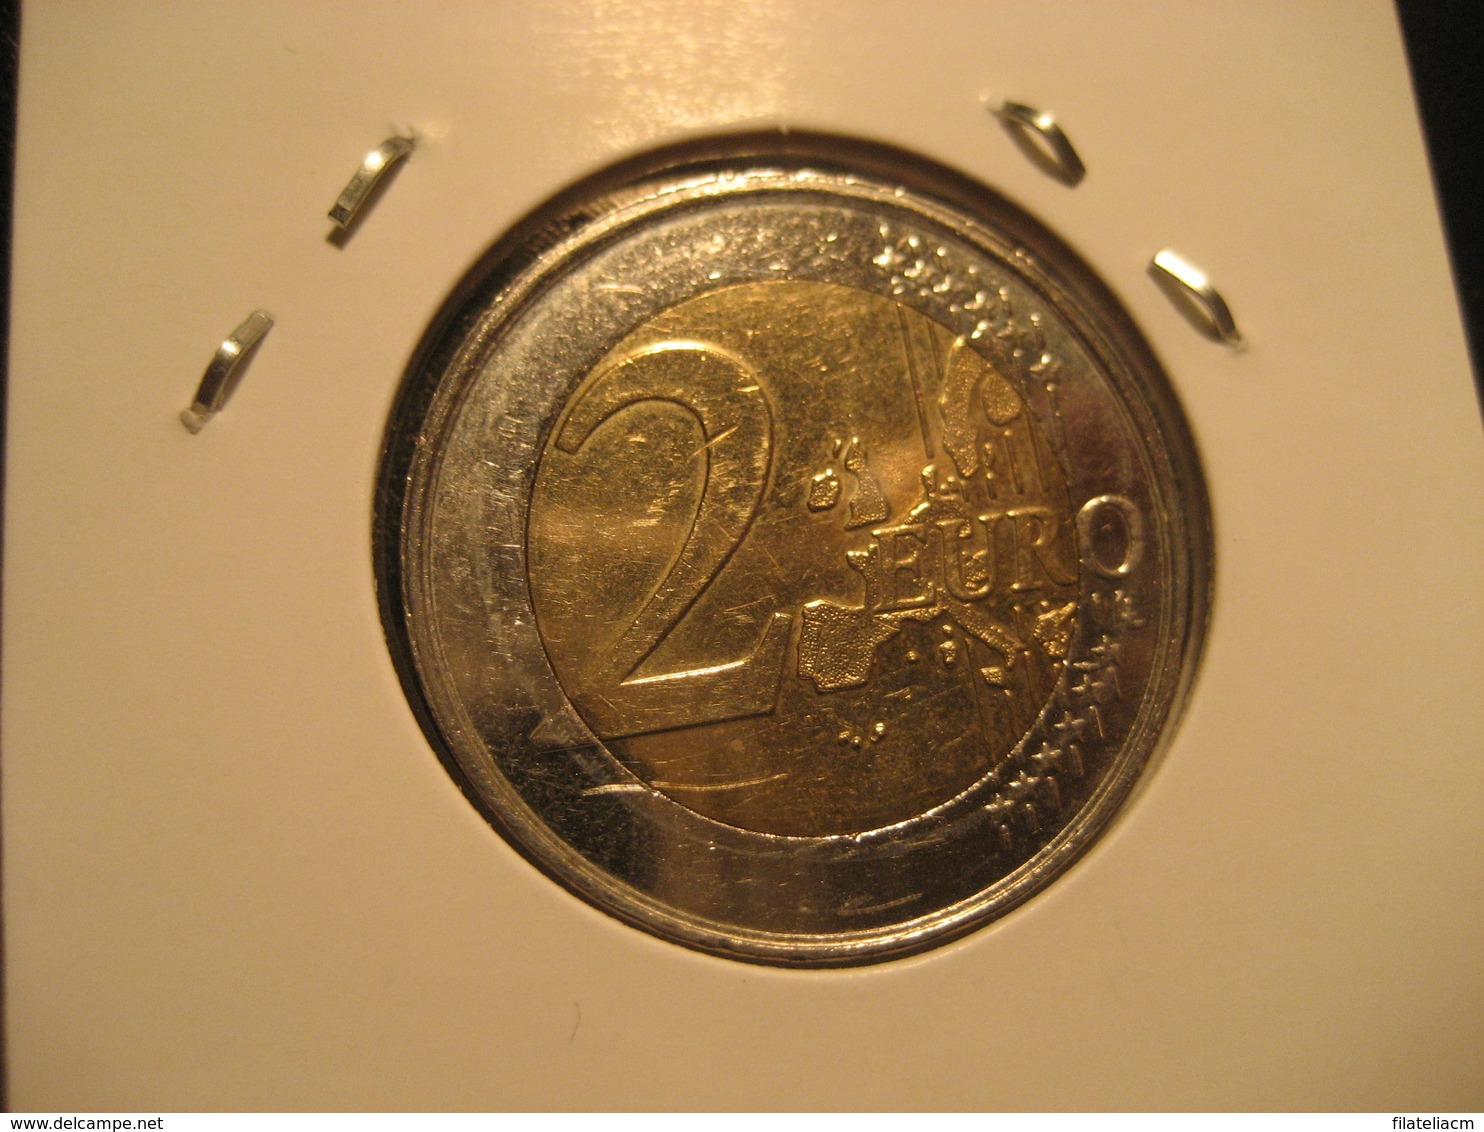 2 EURO 2005 Good Condition BELGIUM Eur Euros Coin BELGIQUE BELGIE - Belgium